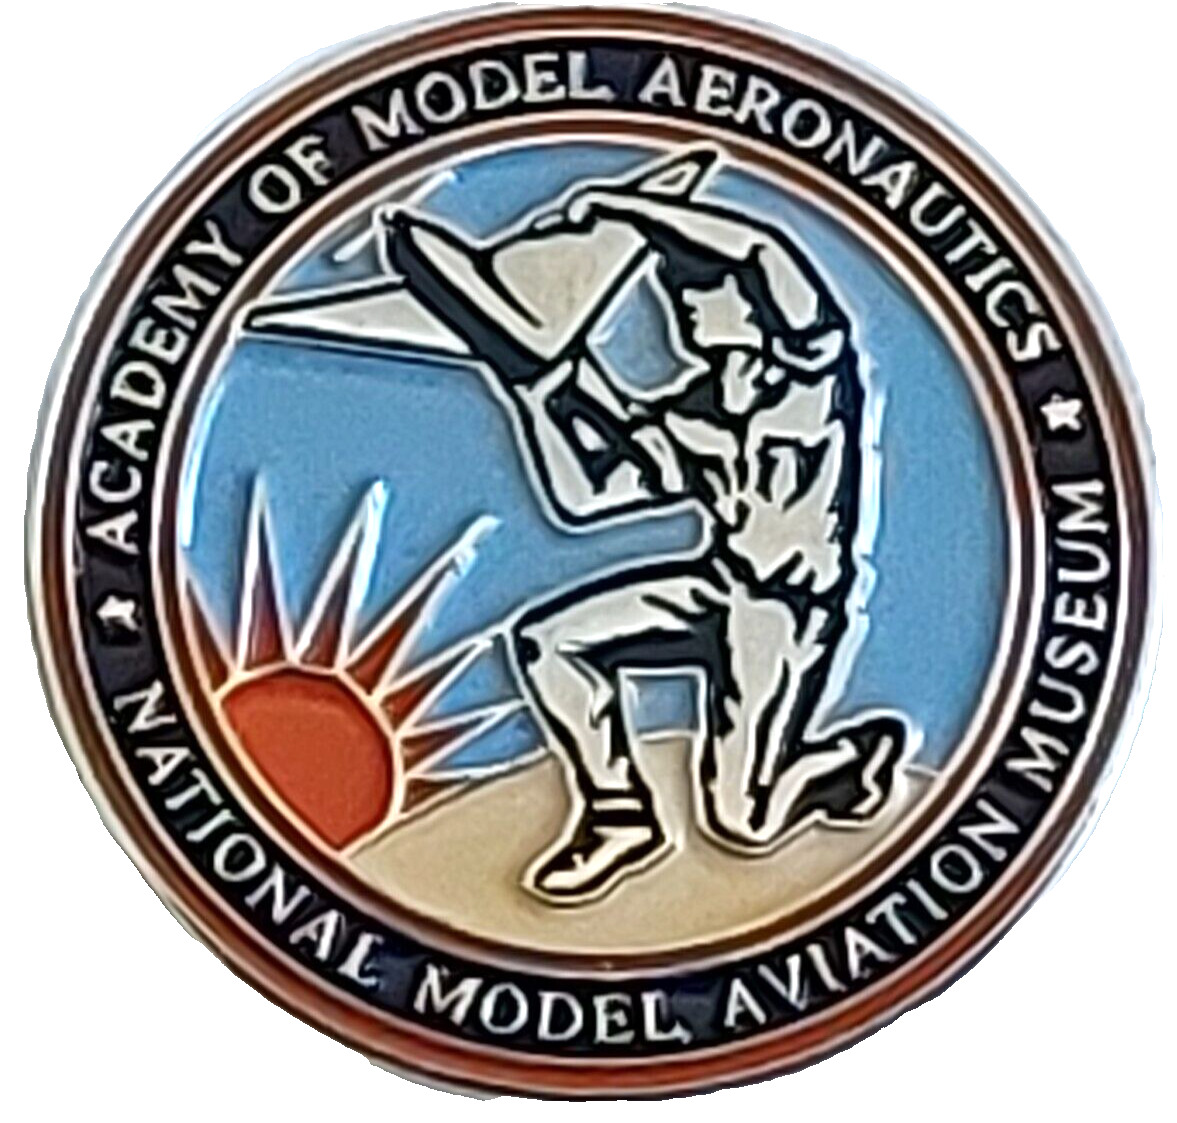 Academy of Model Aeronautics National Model Aviation Museum Lapel Pin